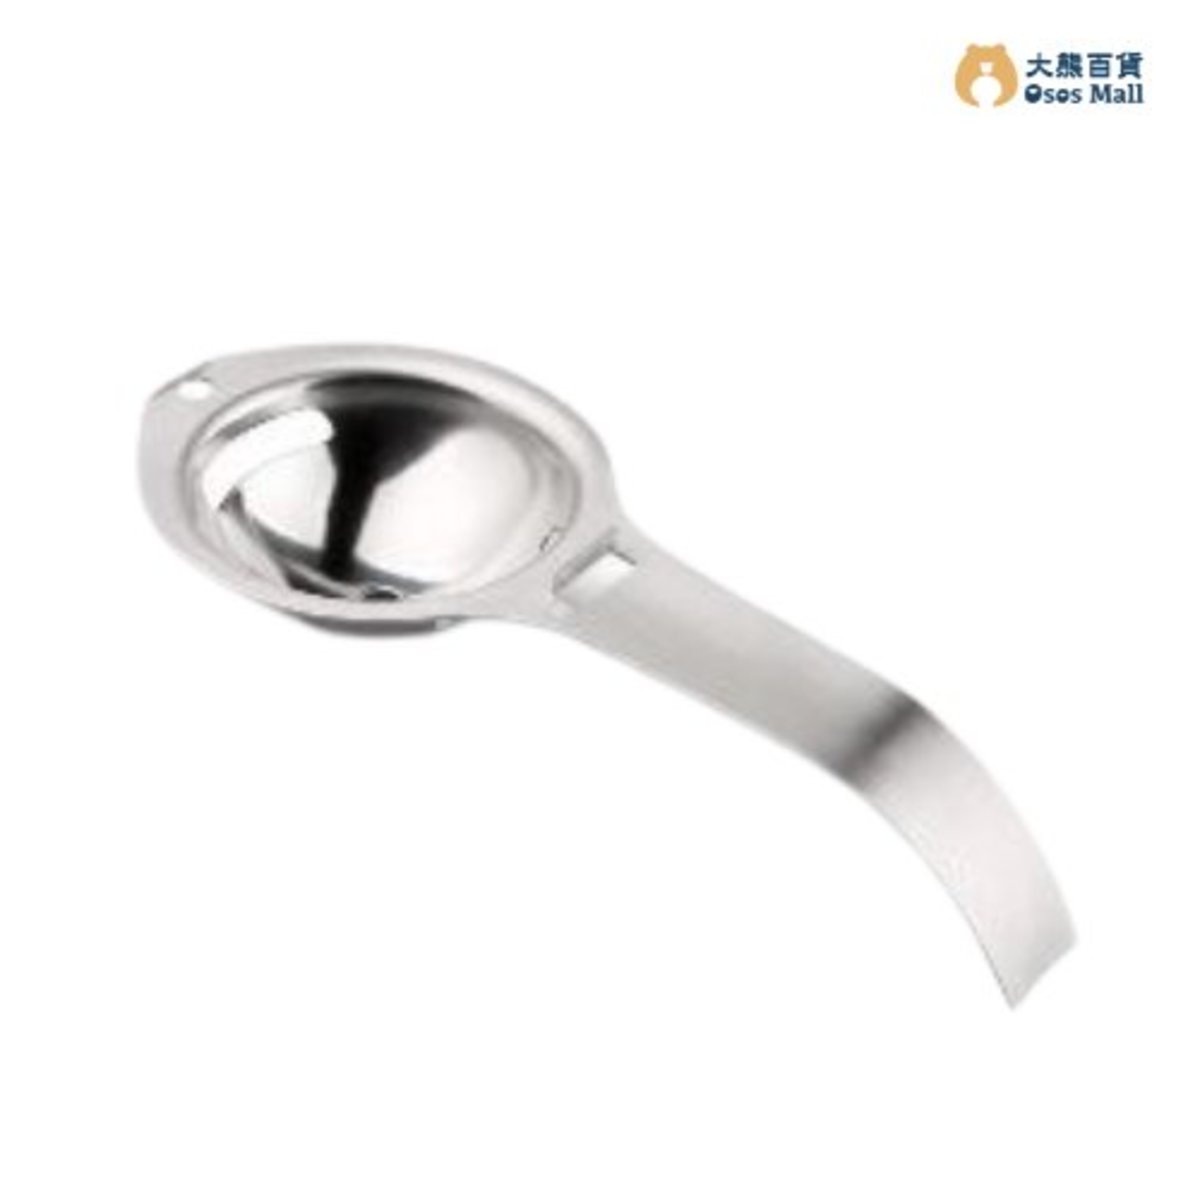 Stainless Steel Egg Separator (Long handle, 1pc) (OSKU058)